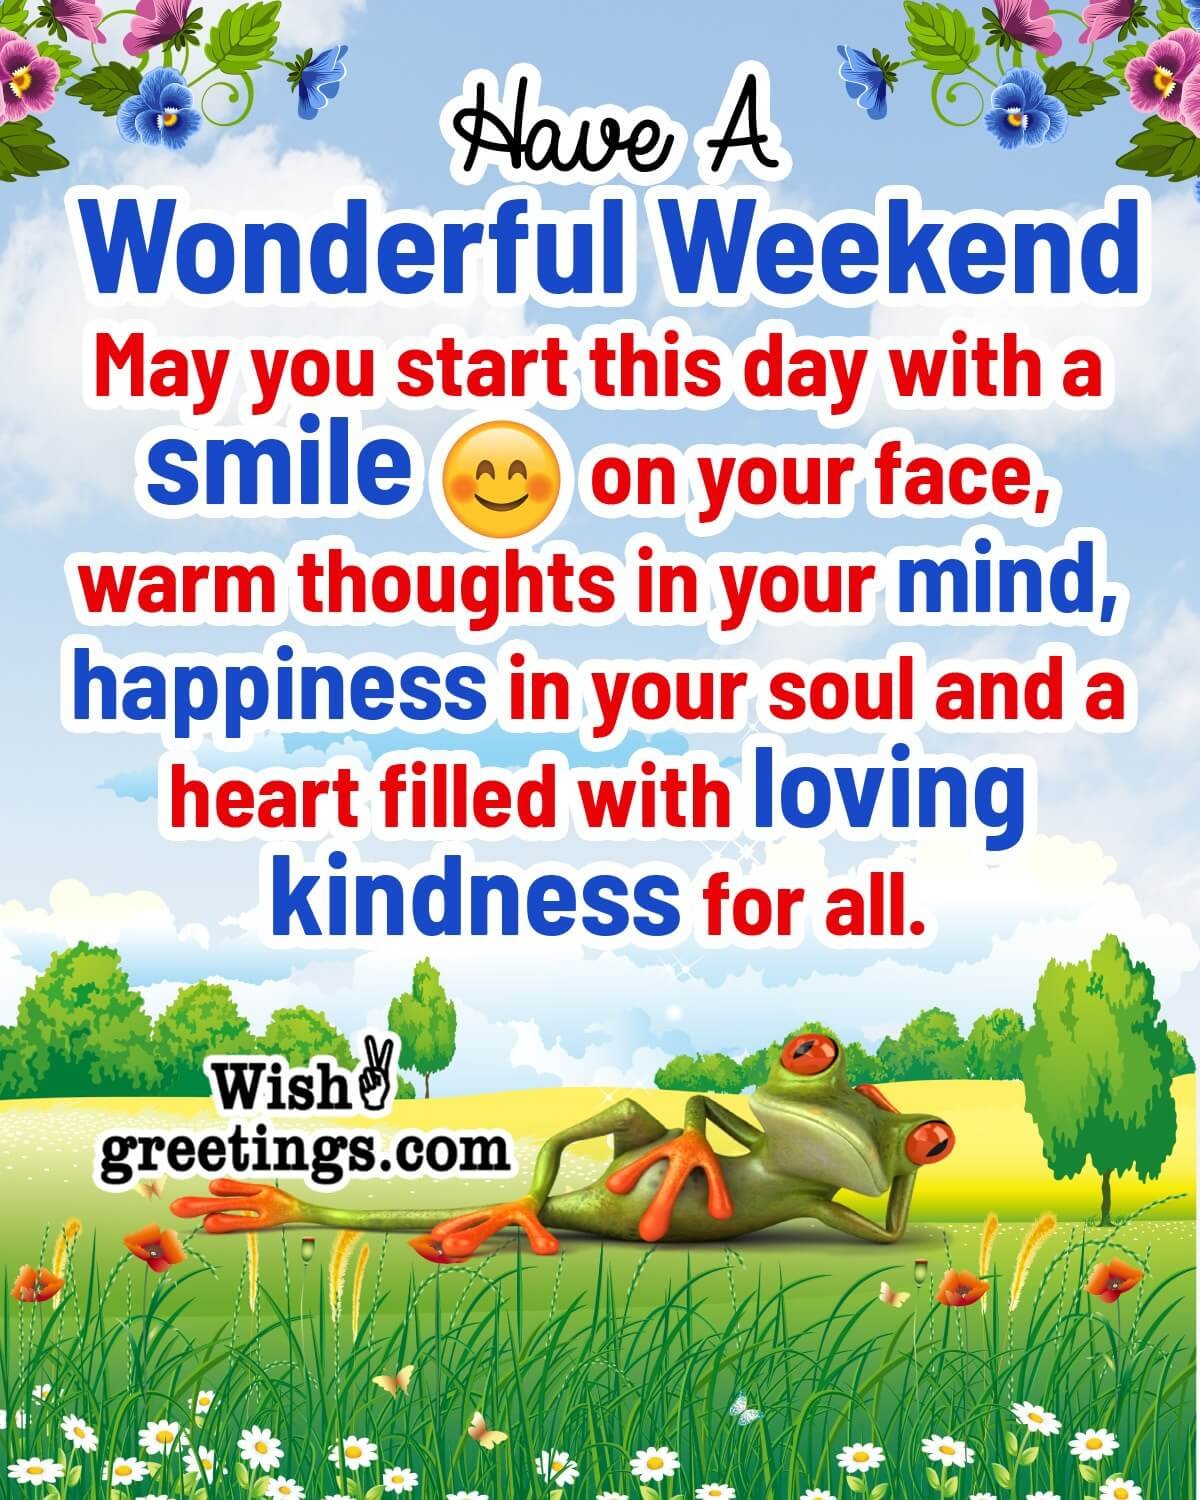 Wonderful Weekend Wish Image